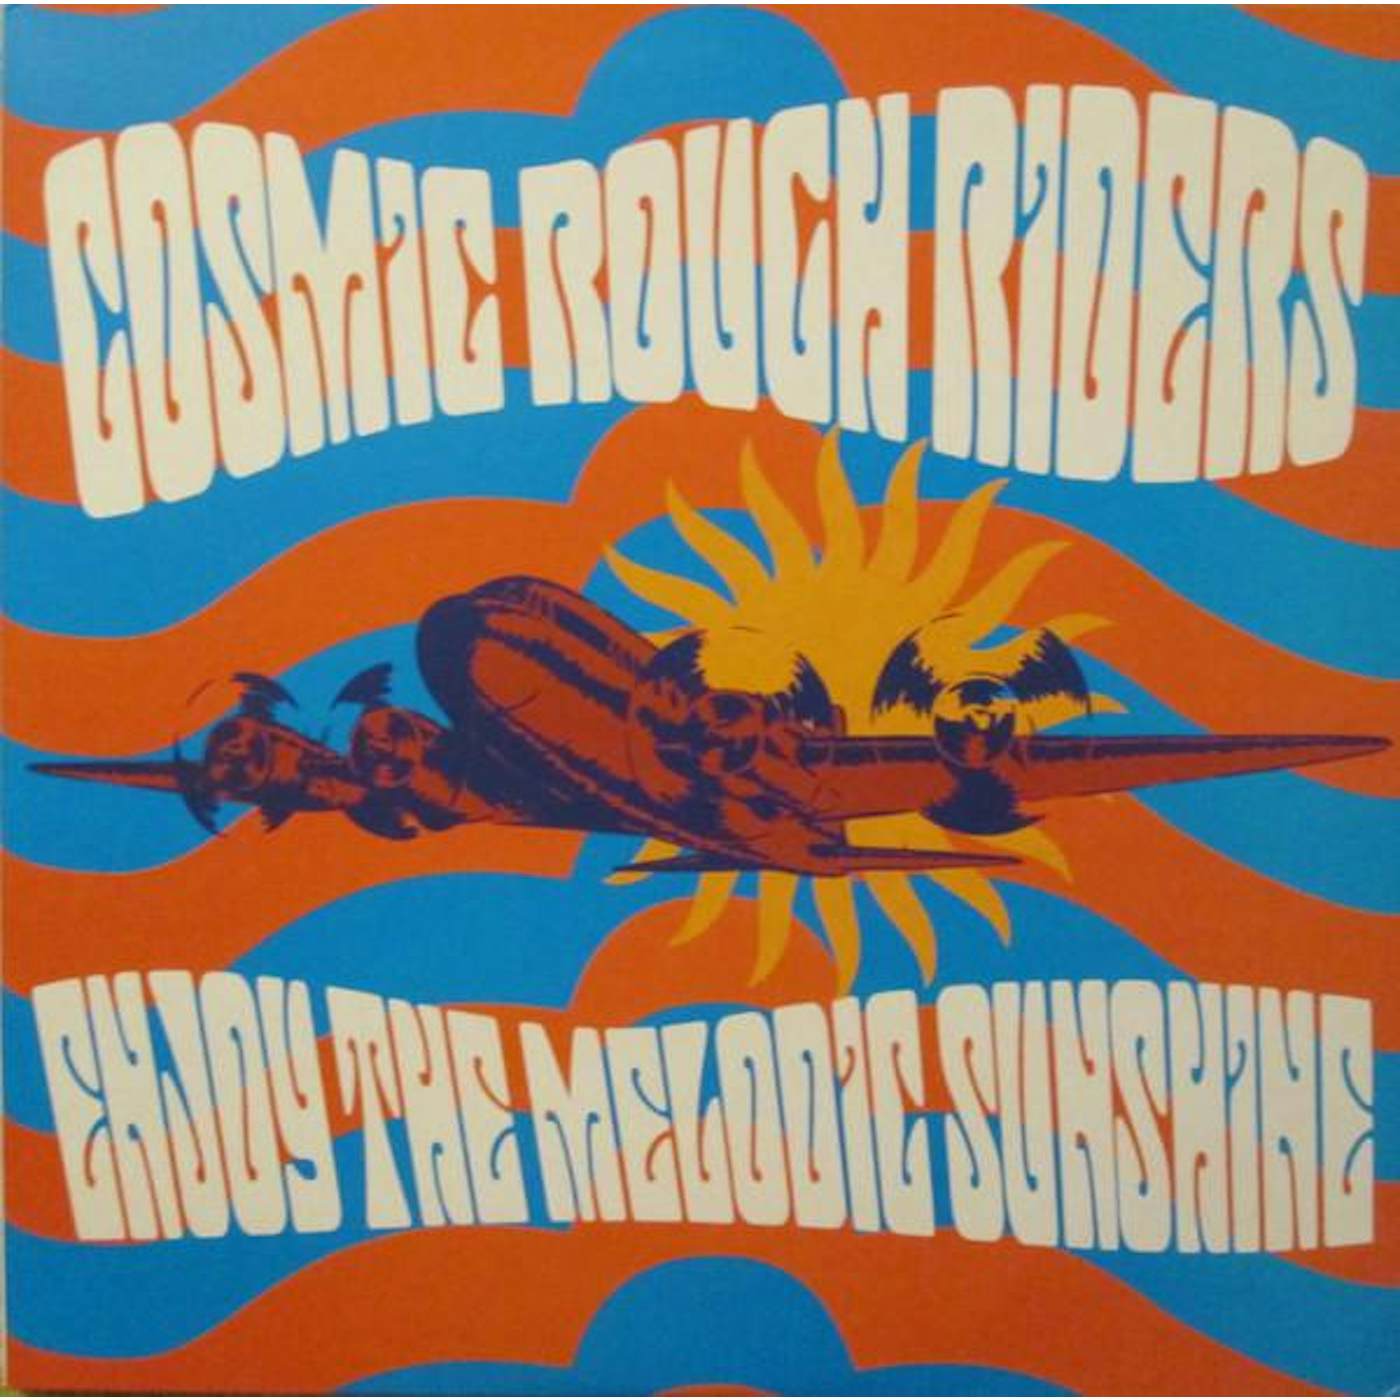 Cosmic Rough Riders ENJOY THE MELODIC SUNSHINE Vinyl Record